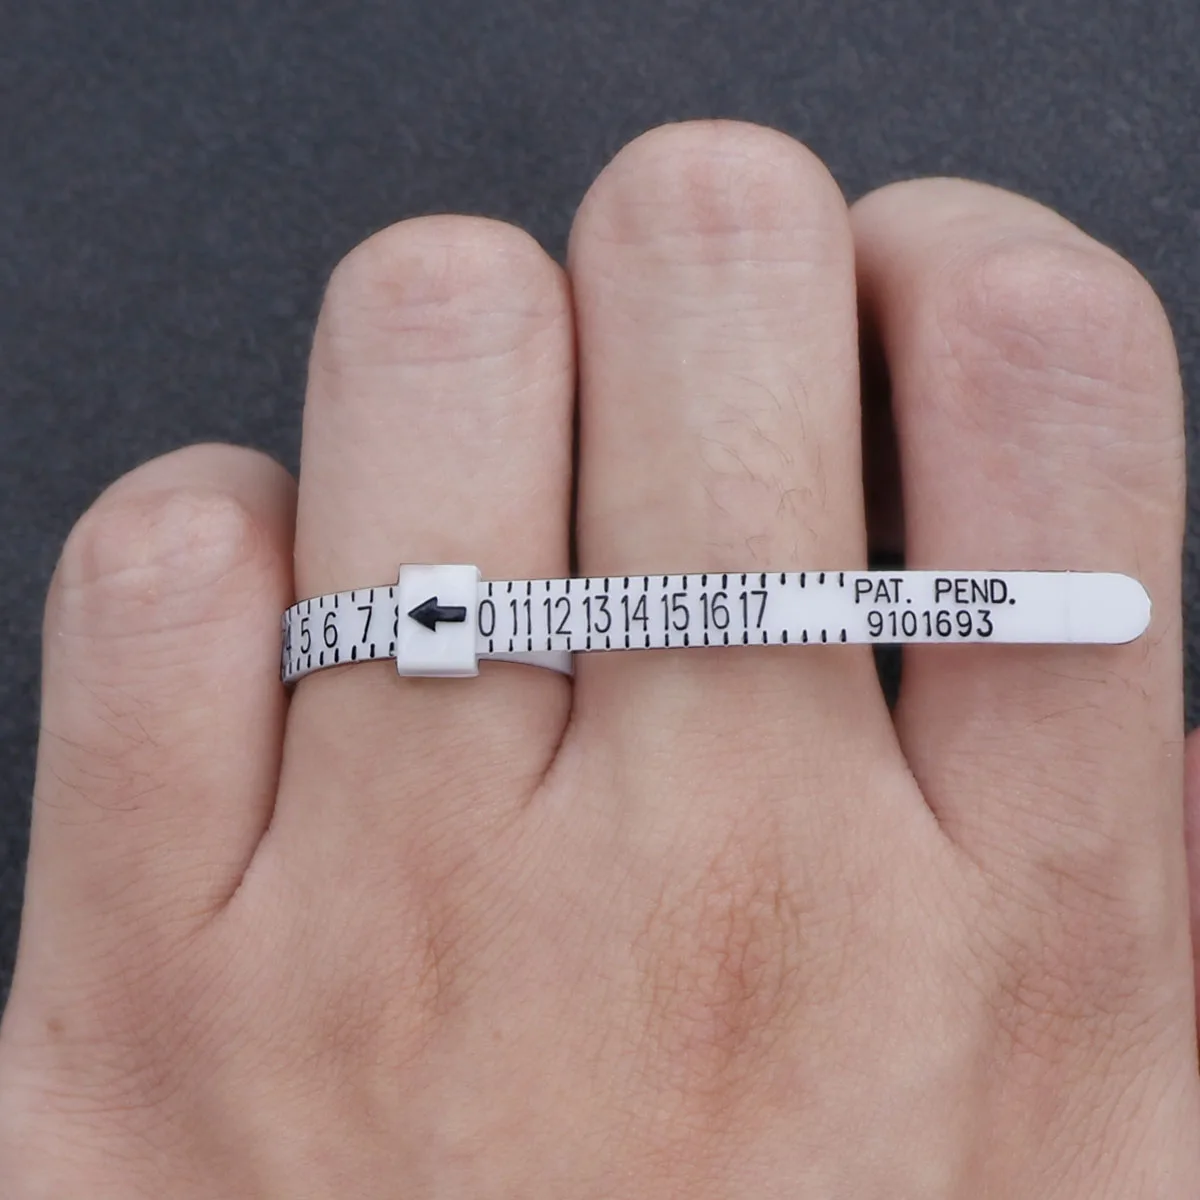 Z+2 Free Postage UK Ring finger sizer measure gauge all British UK sizes A 